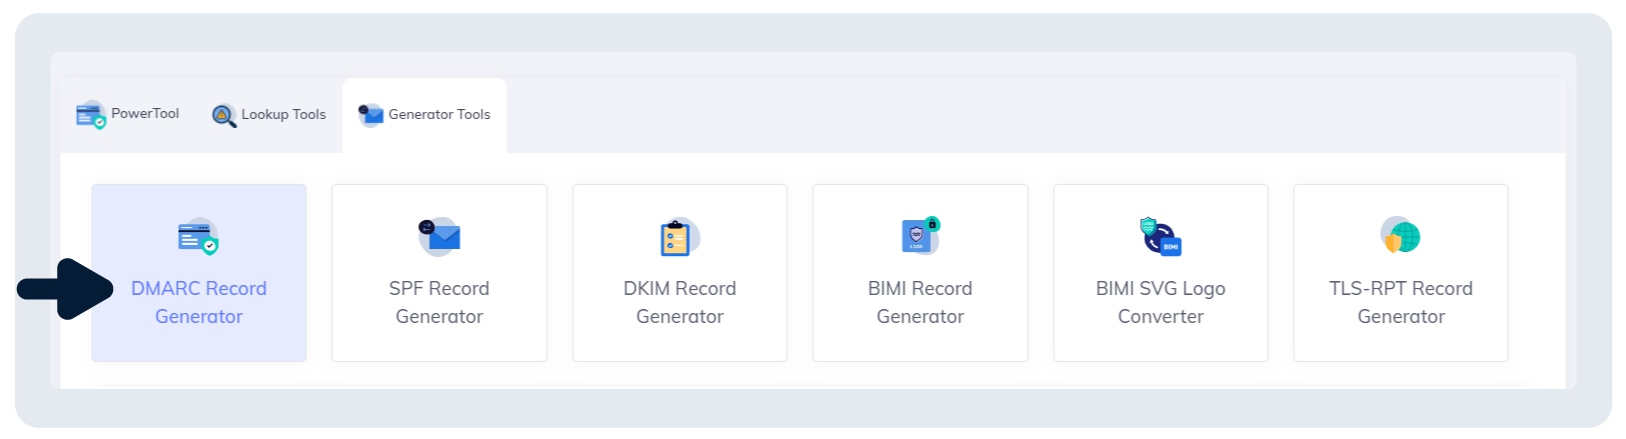 Vælg DMARC record generator